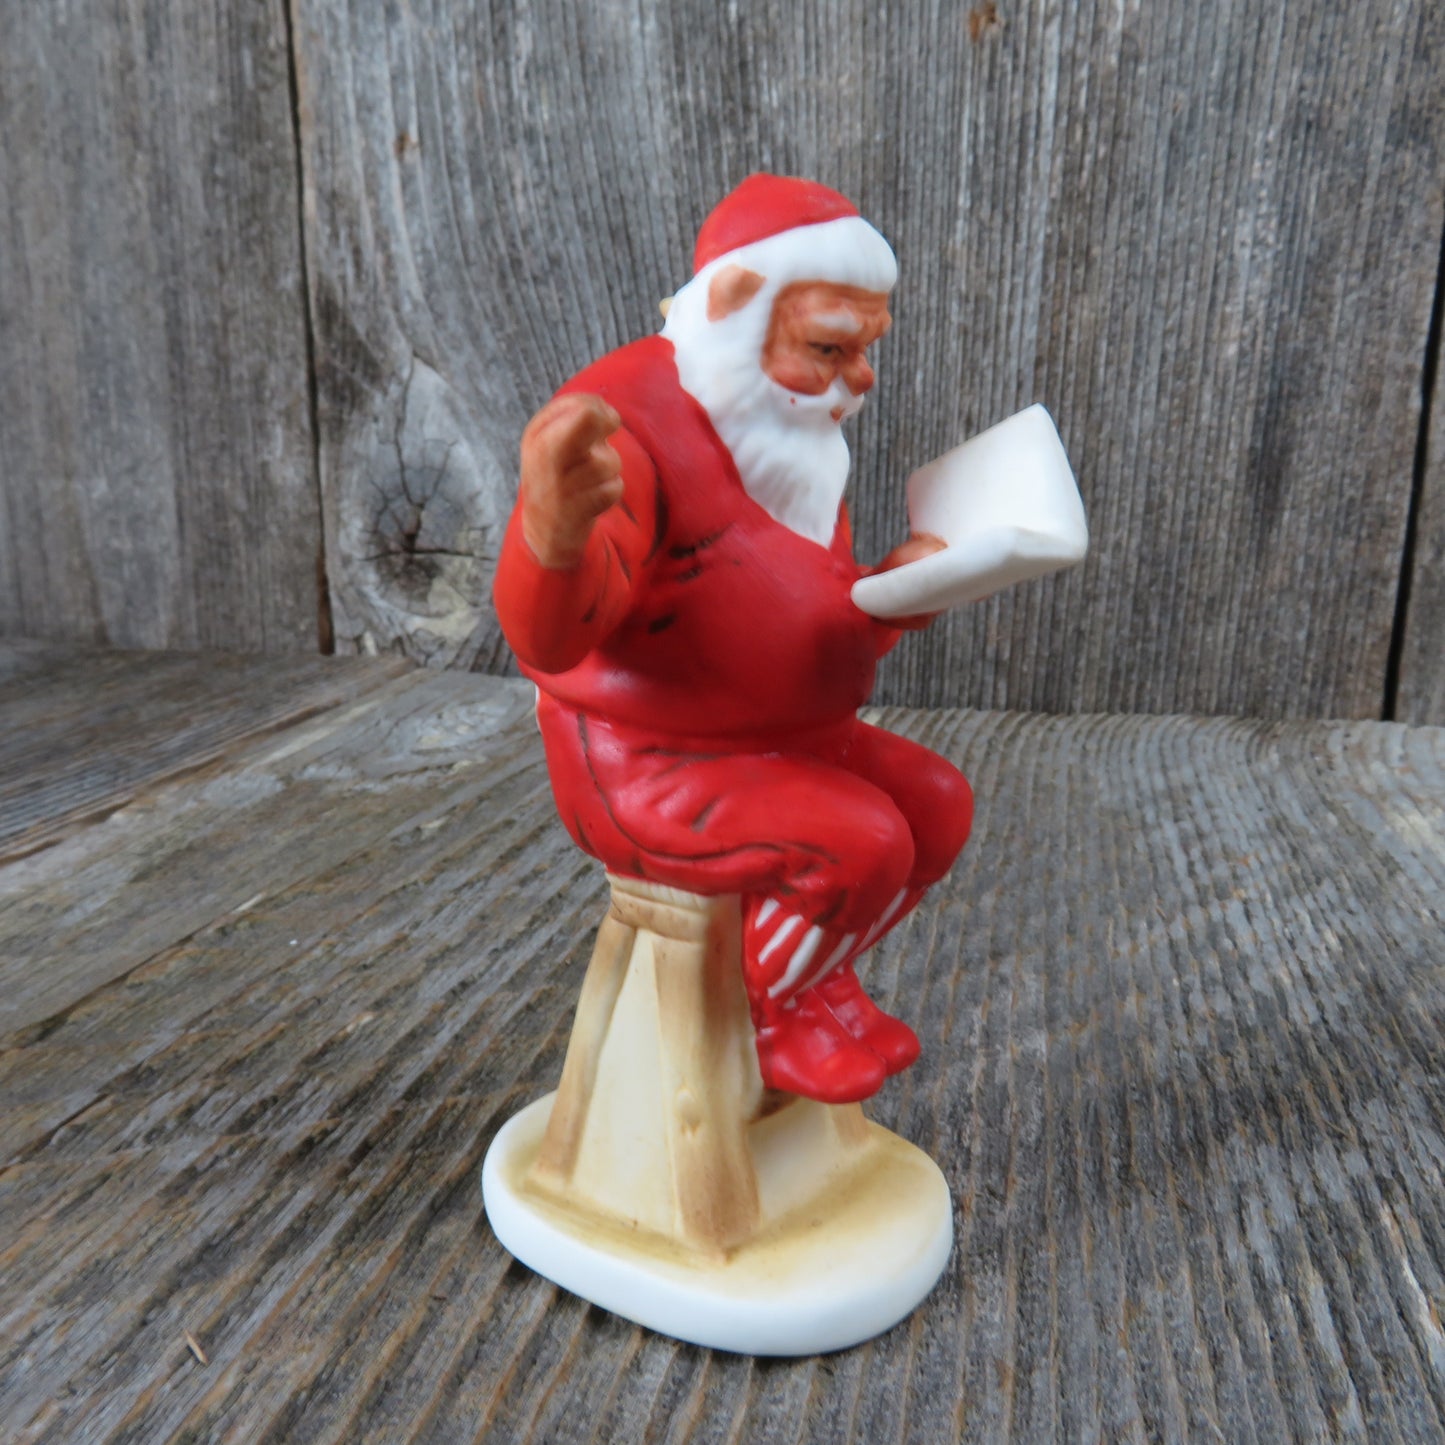 Vintage Santa Christmas Ceramic Figurine Gorham Bisque Porcelain Santa Plans His Visit - At Grandma's Table